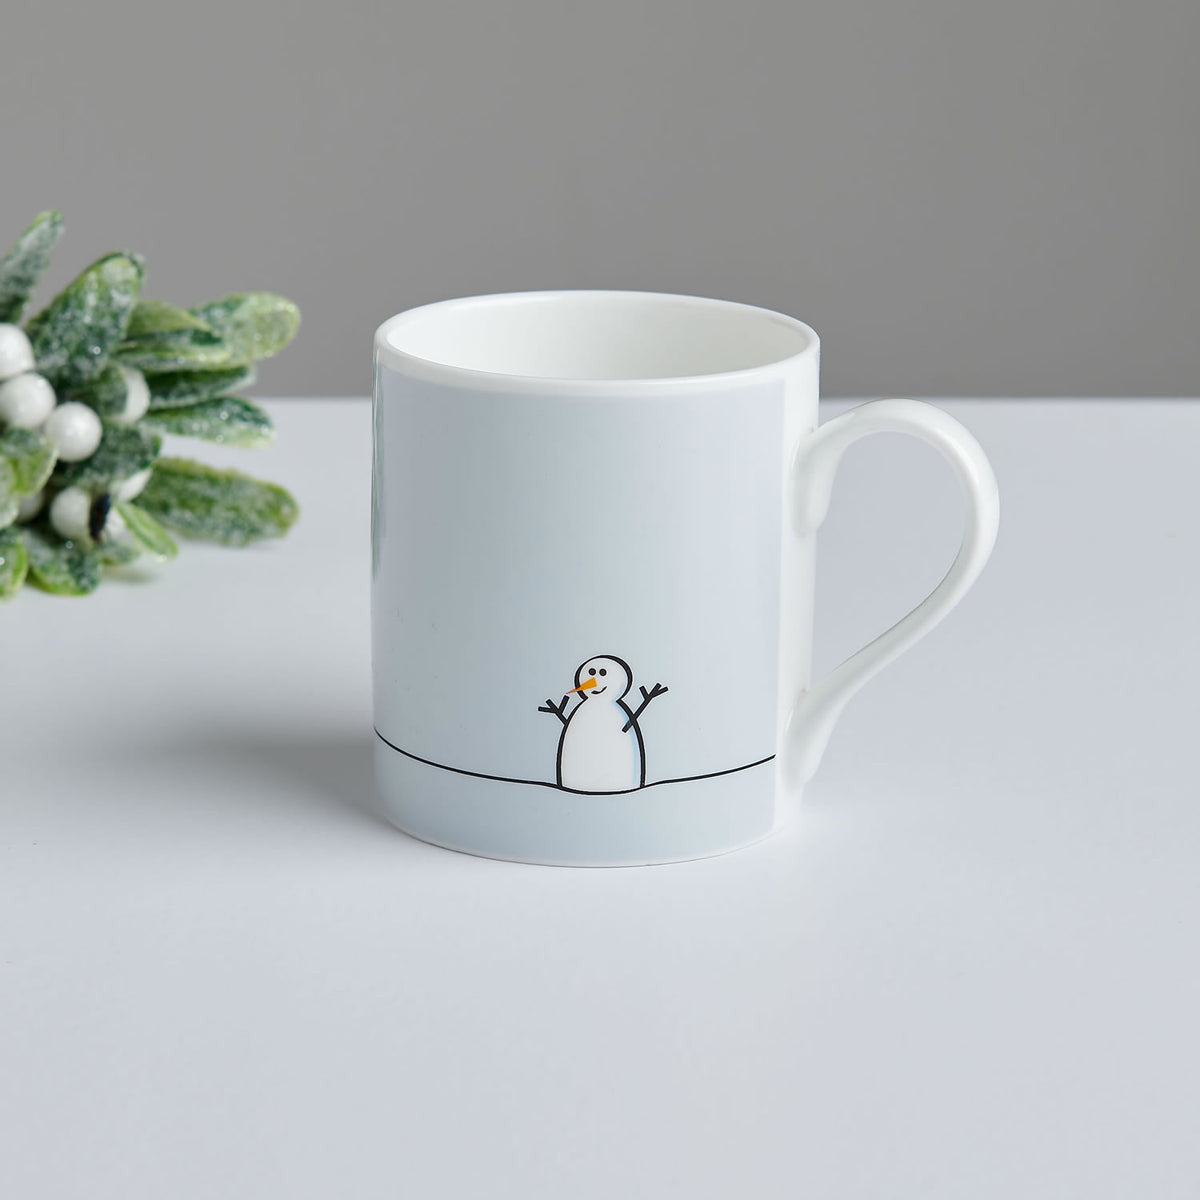 Snowman Bone China Mug by Jin Designs.